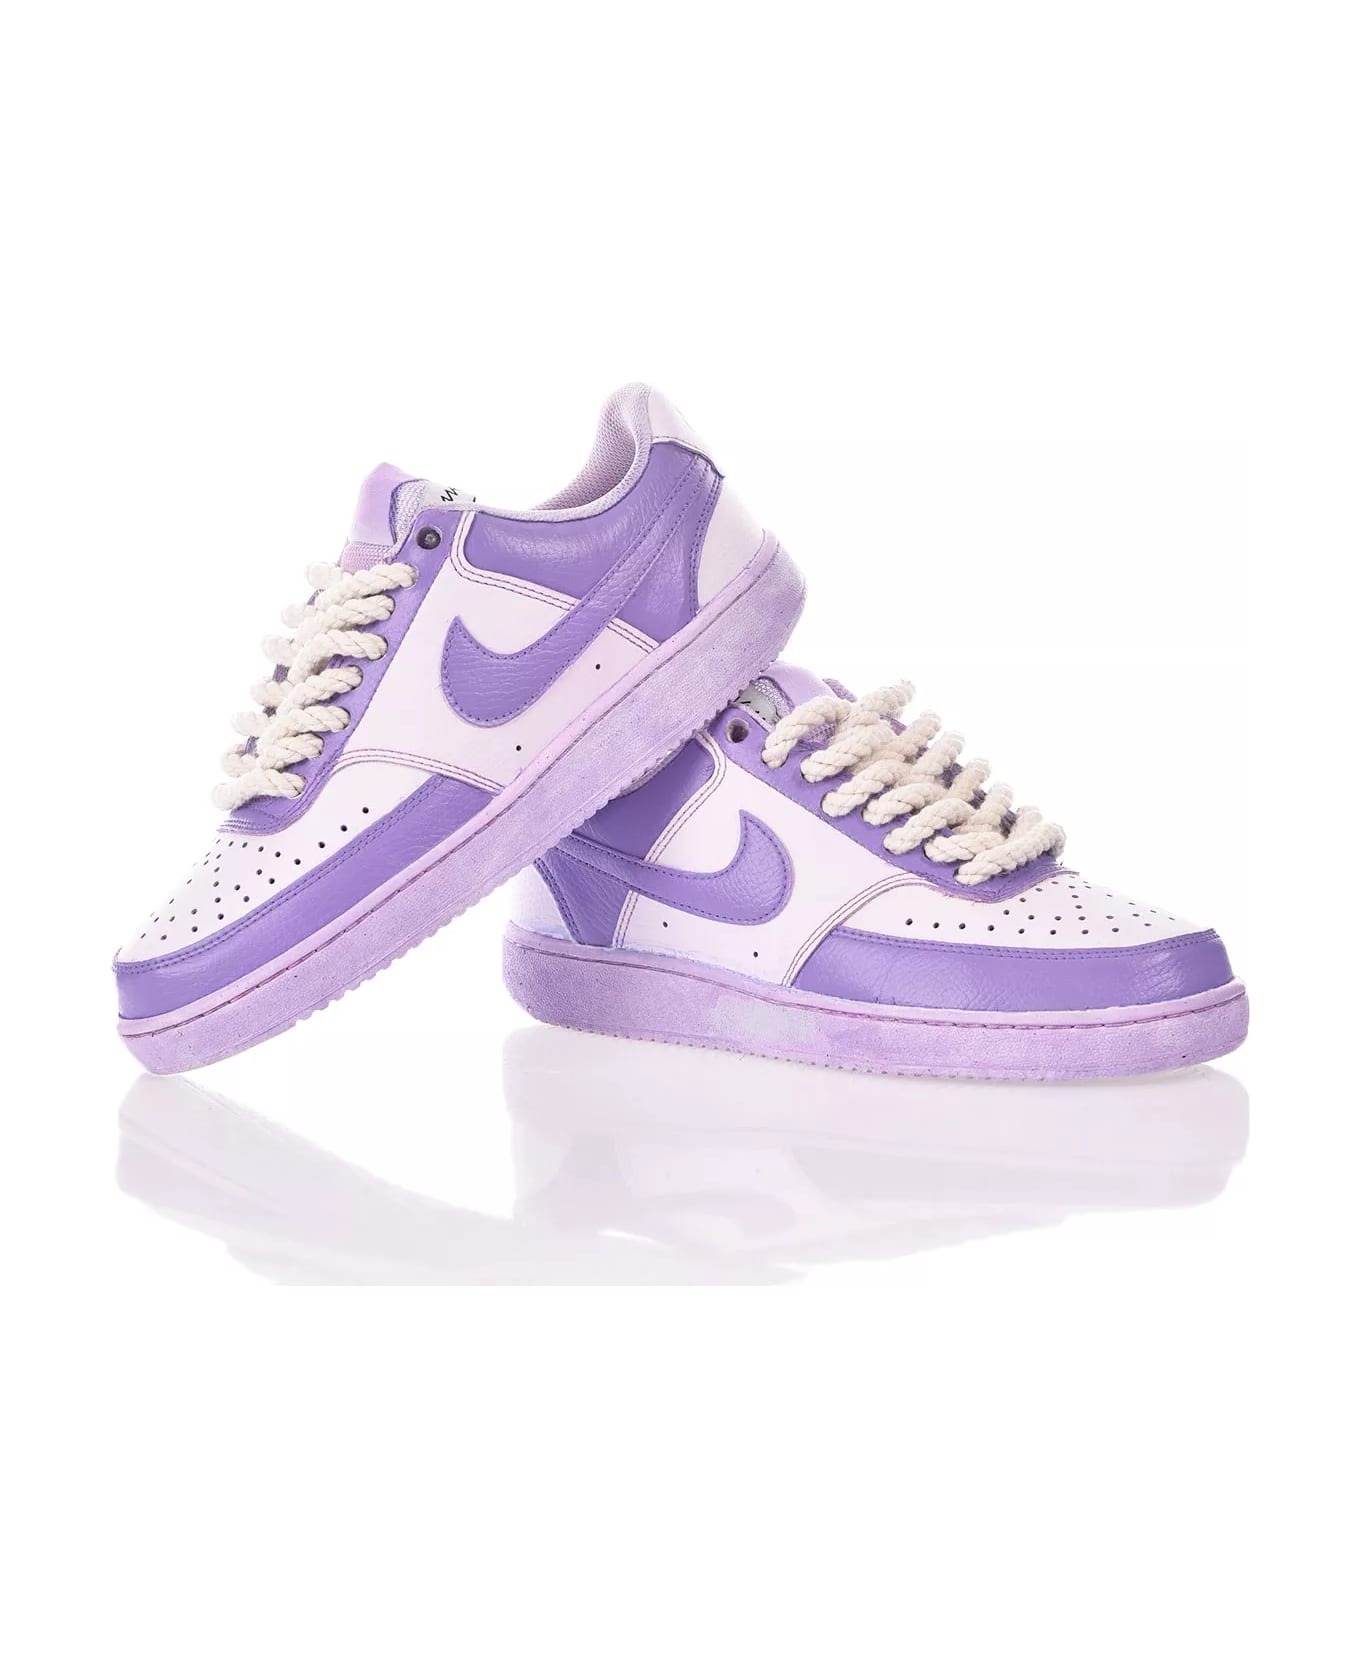 Mimanera Nike Purple Shoes: Mimanerashop.com スニーカー